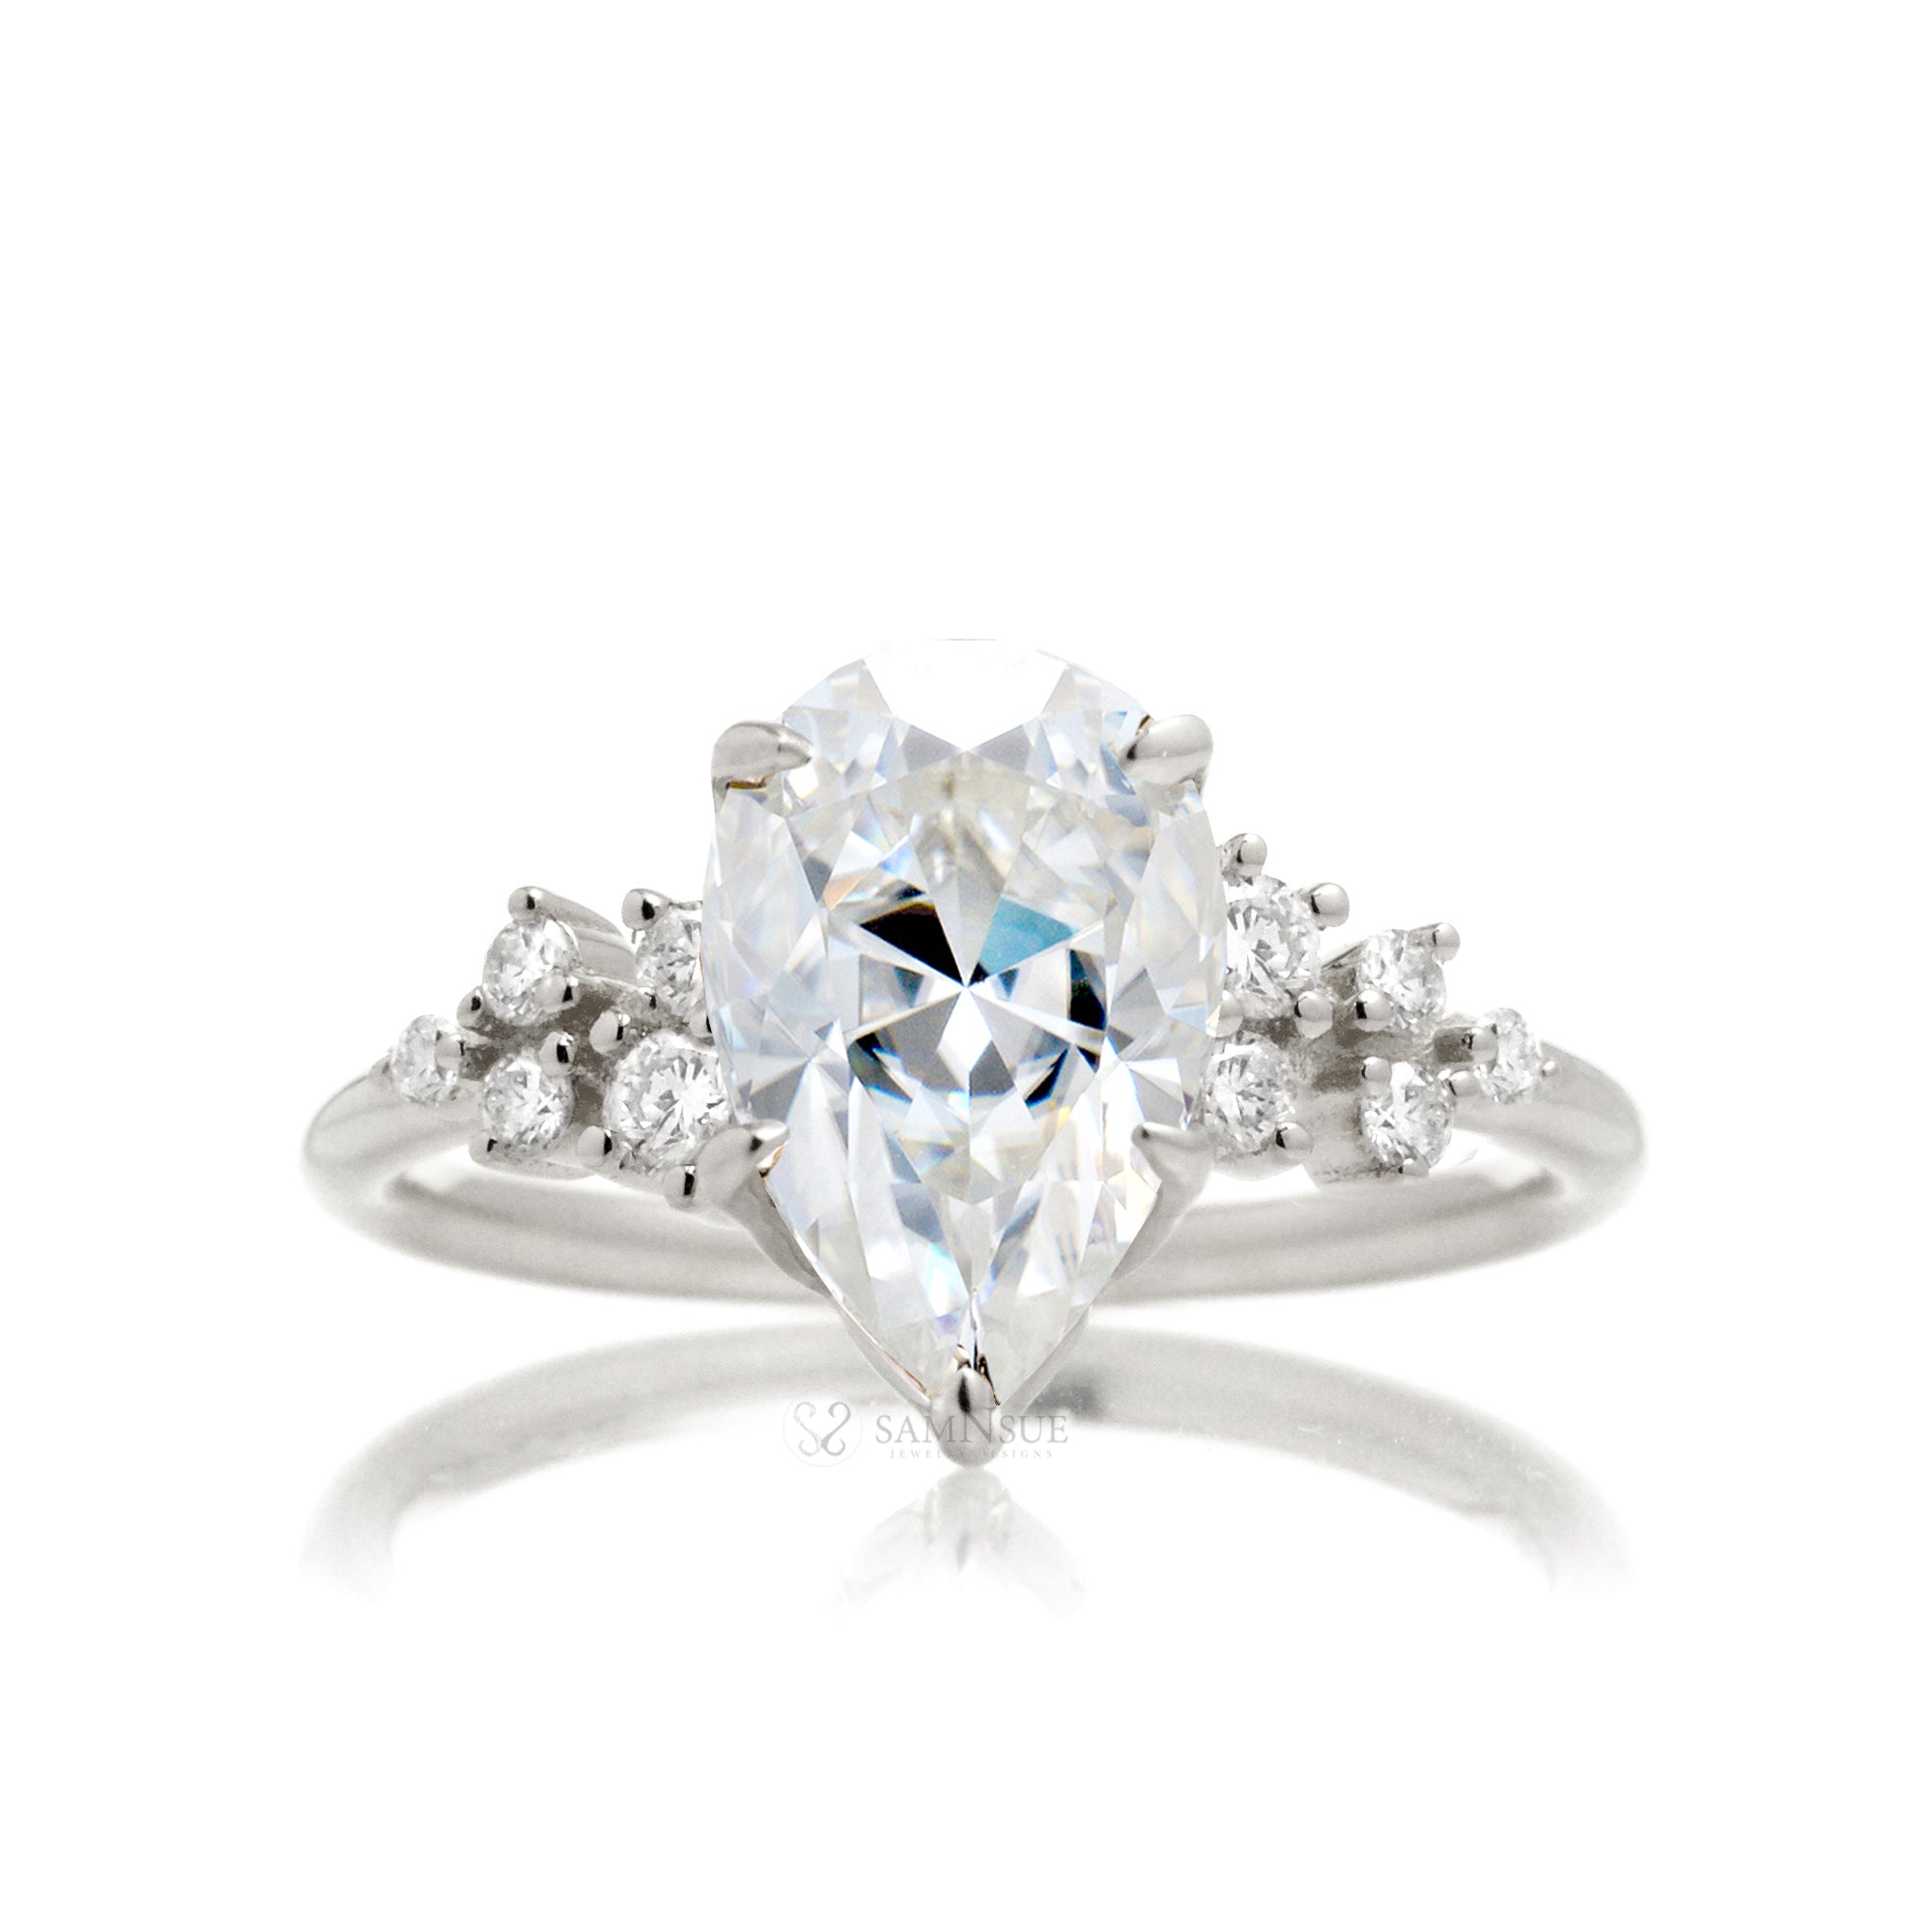 Pear moissanite diamond engagement ring the Stella constellation white gold ring